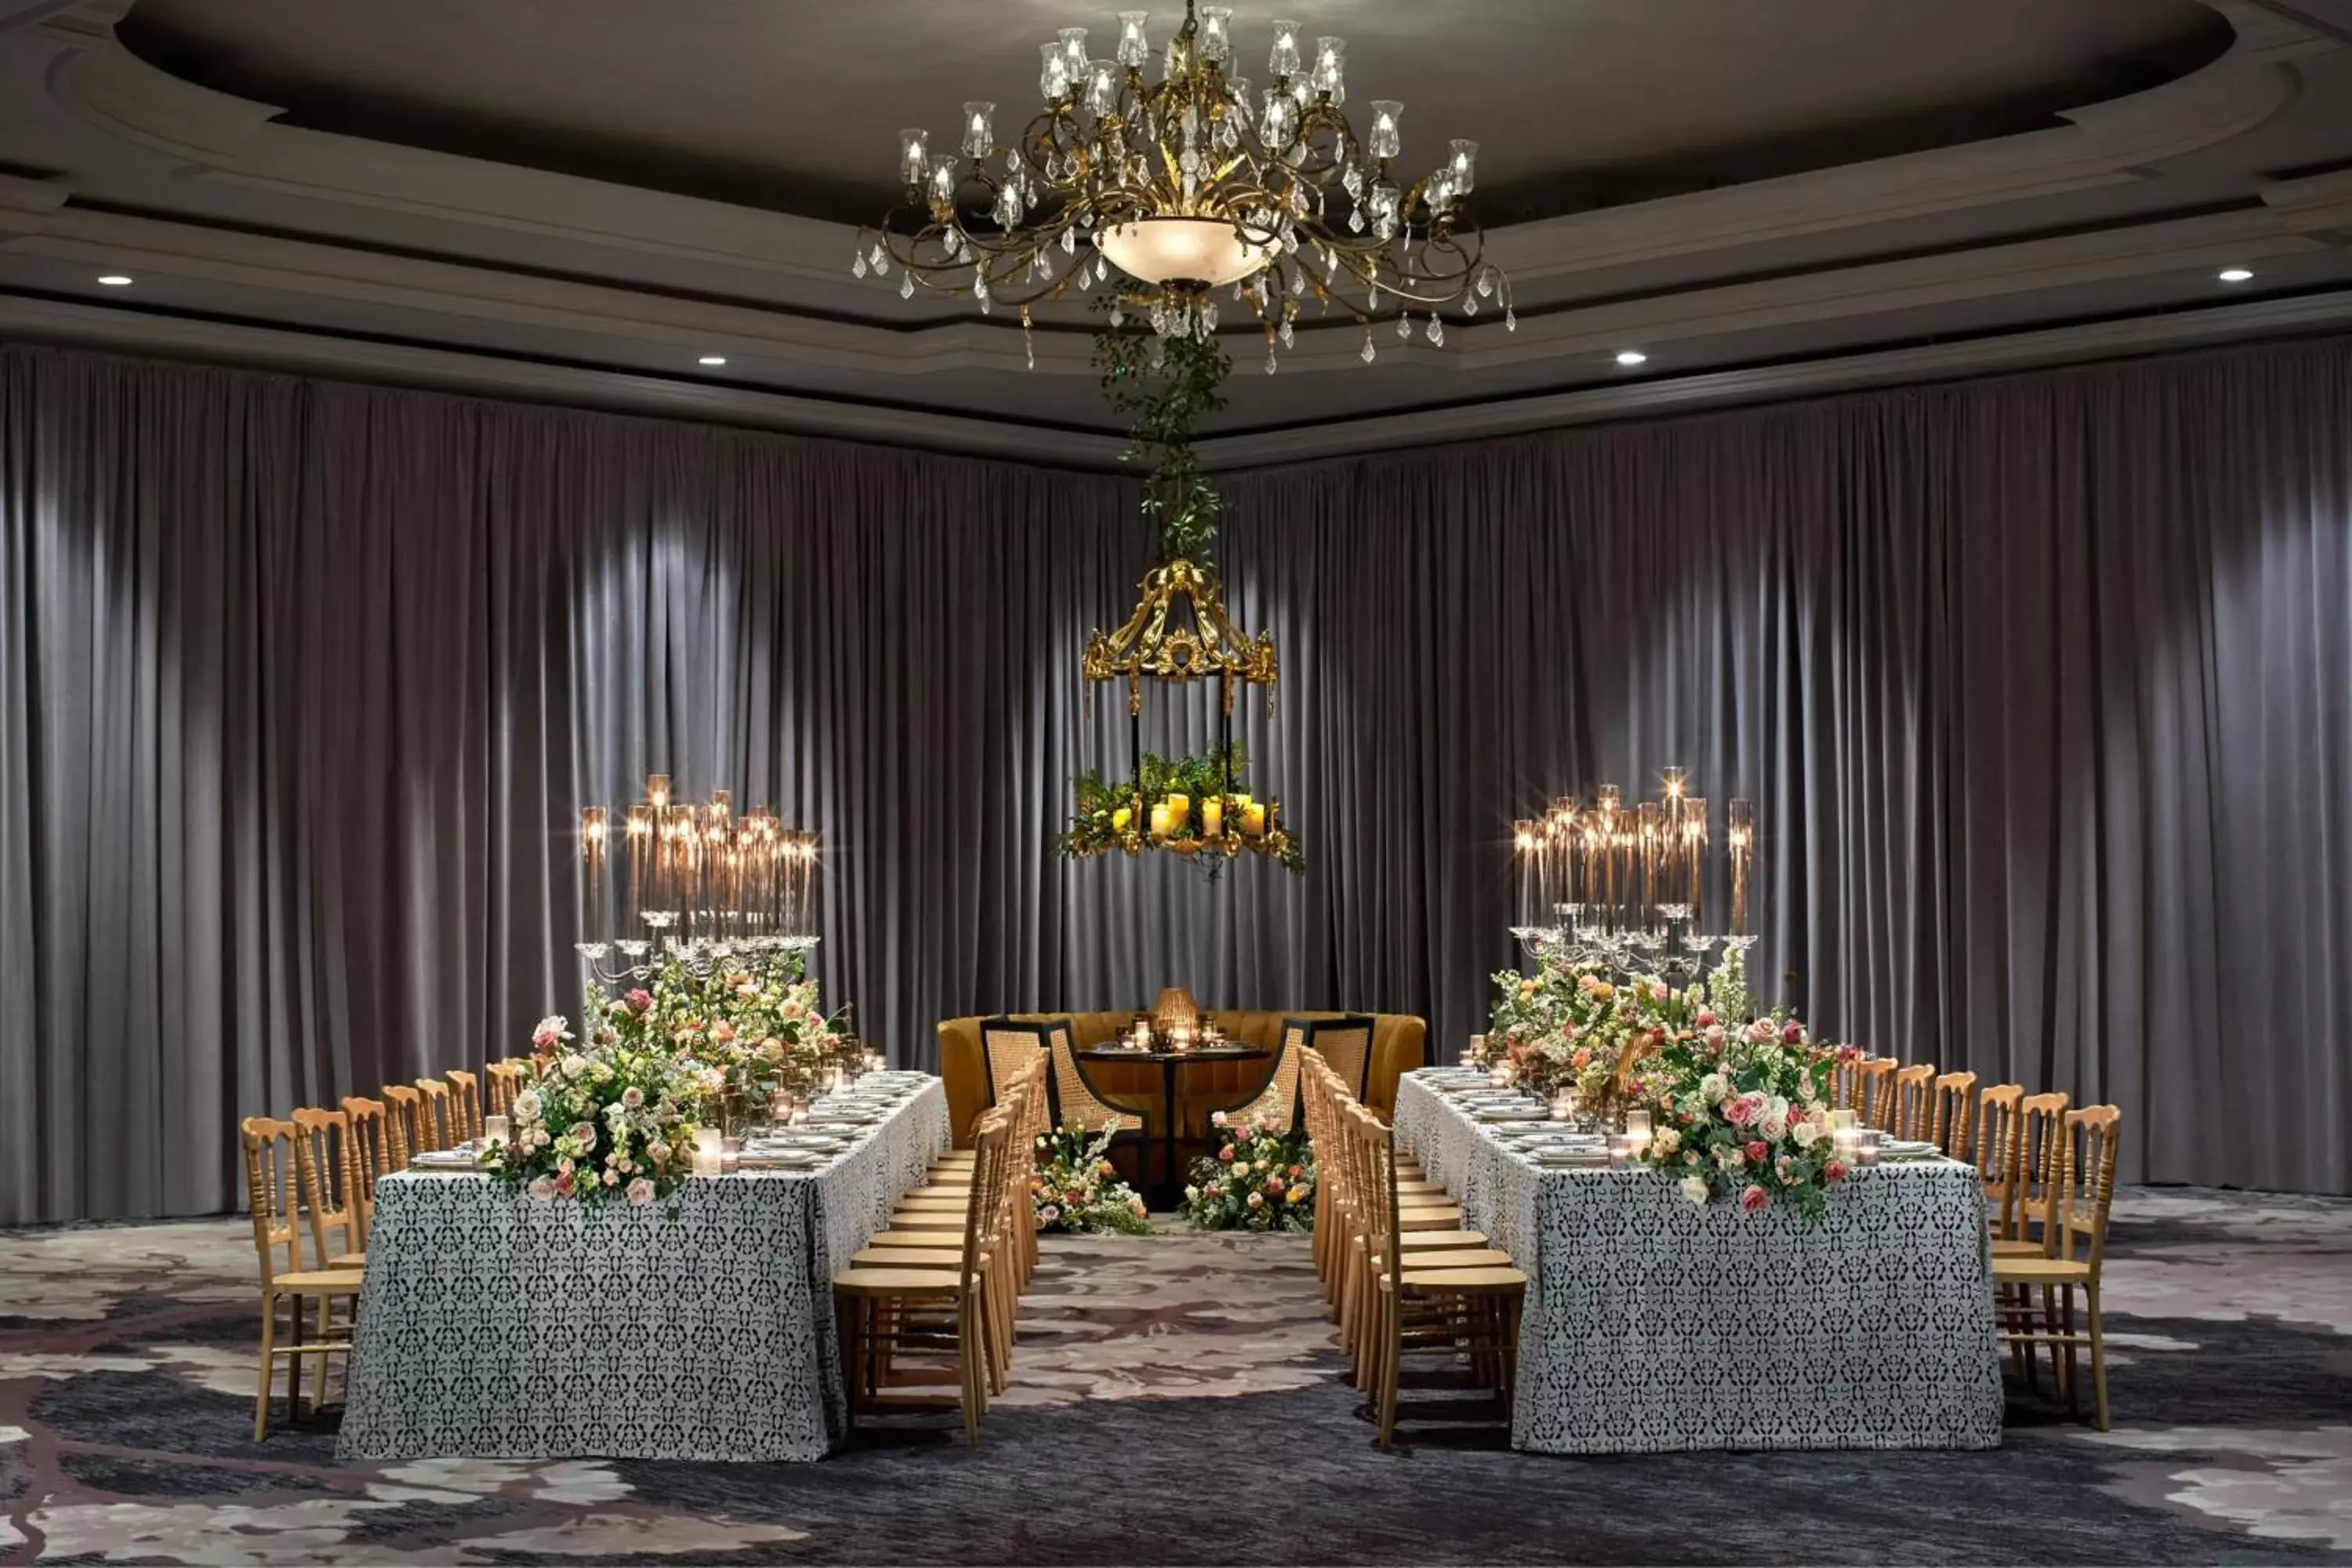 Banquet/Function facilities, Banquet Facilities in The Ritz-Carlton, Washington, D.C.